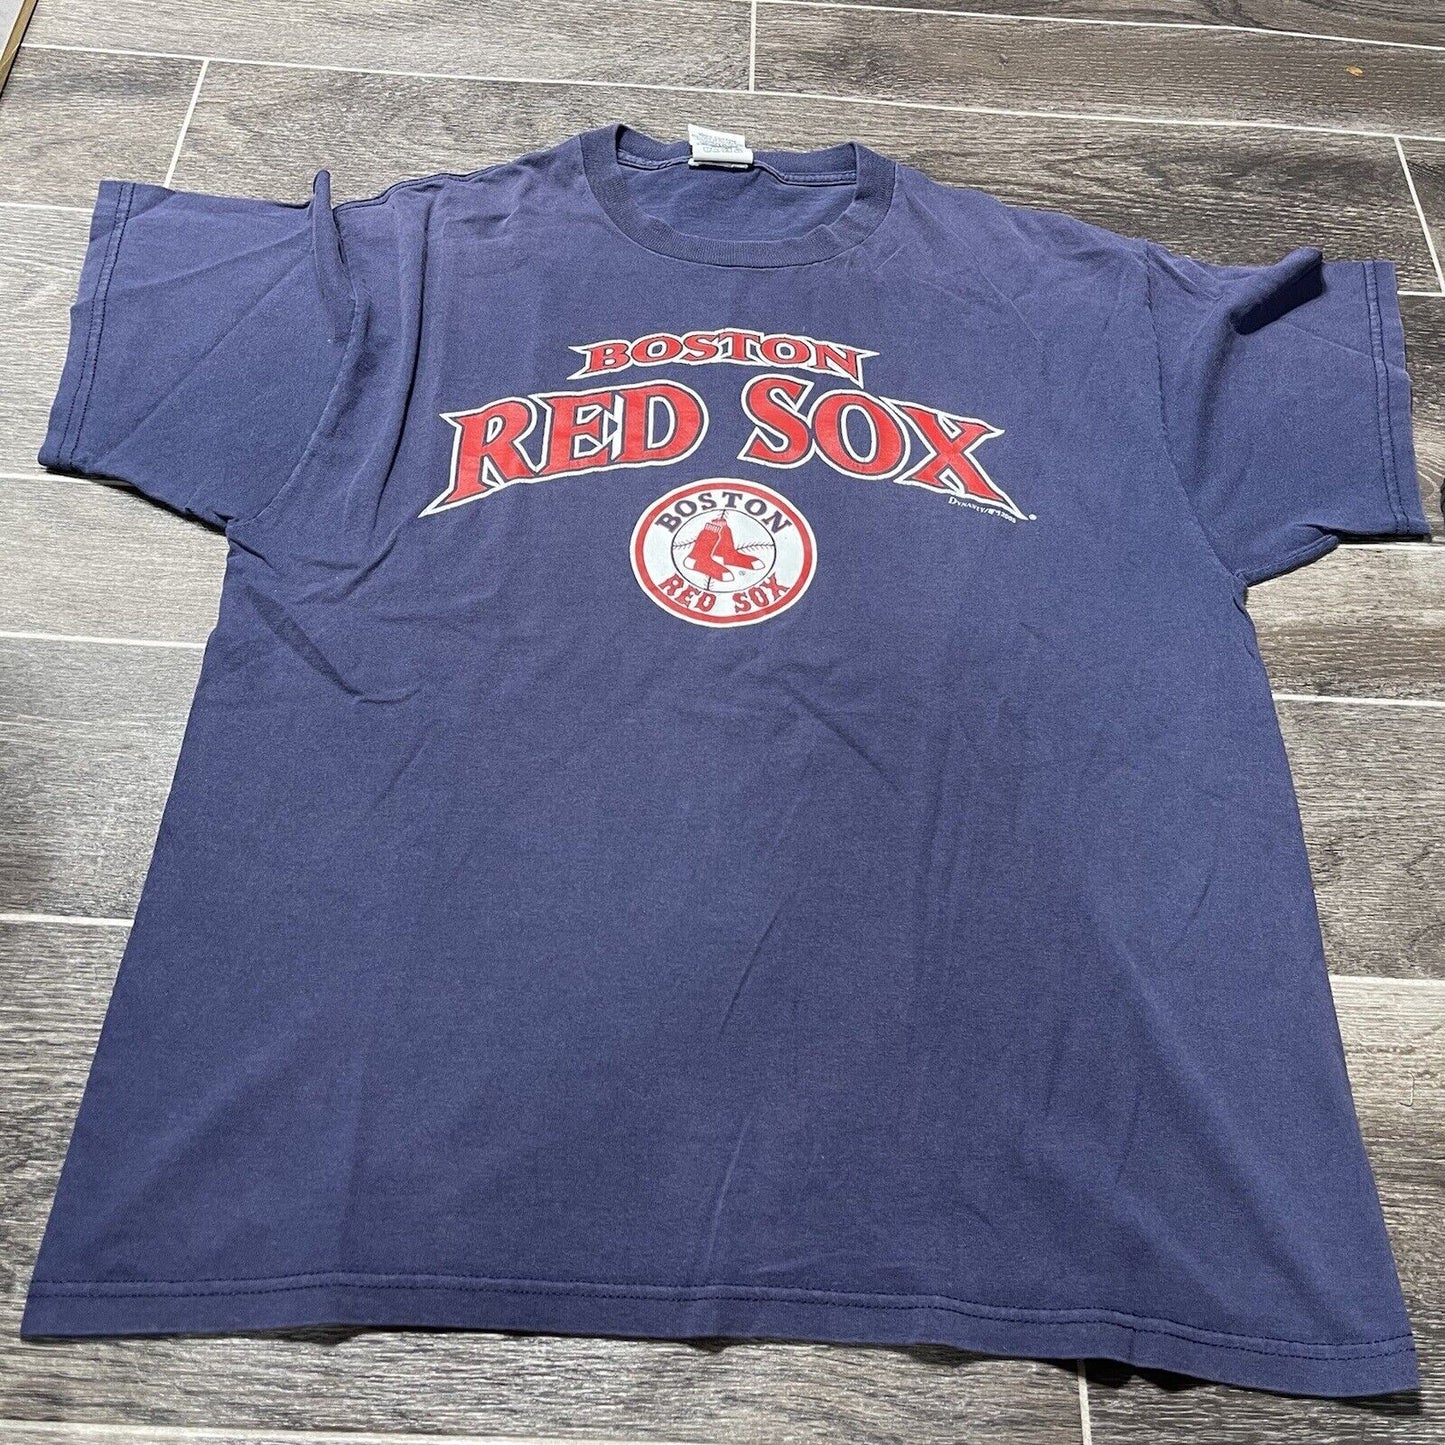 vintage dynasty boston red sox shirt Size Large